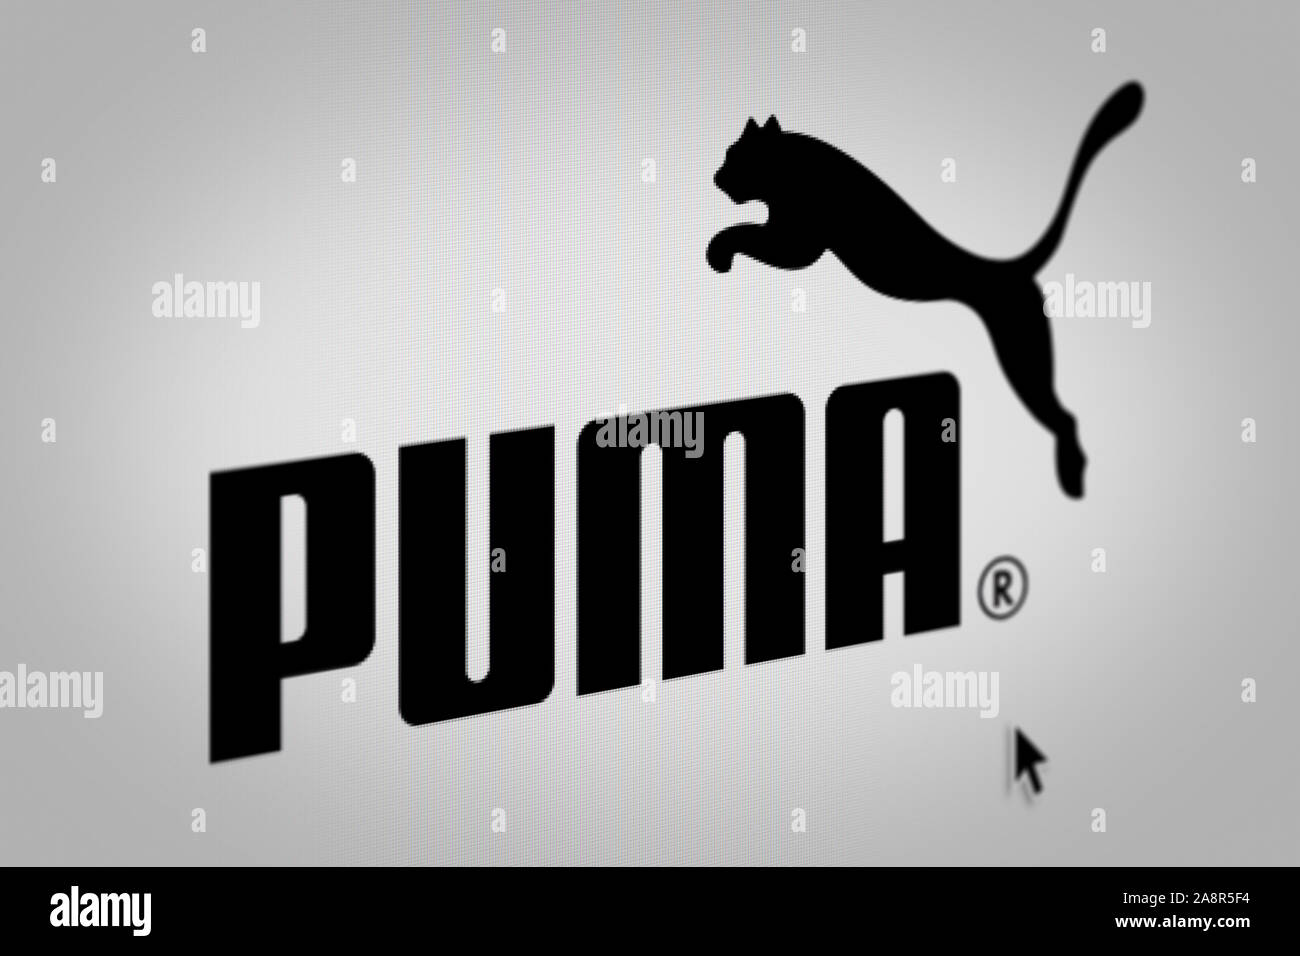 Puma cap hi-res stock photography and images - Alamy